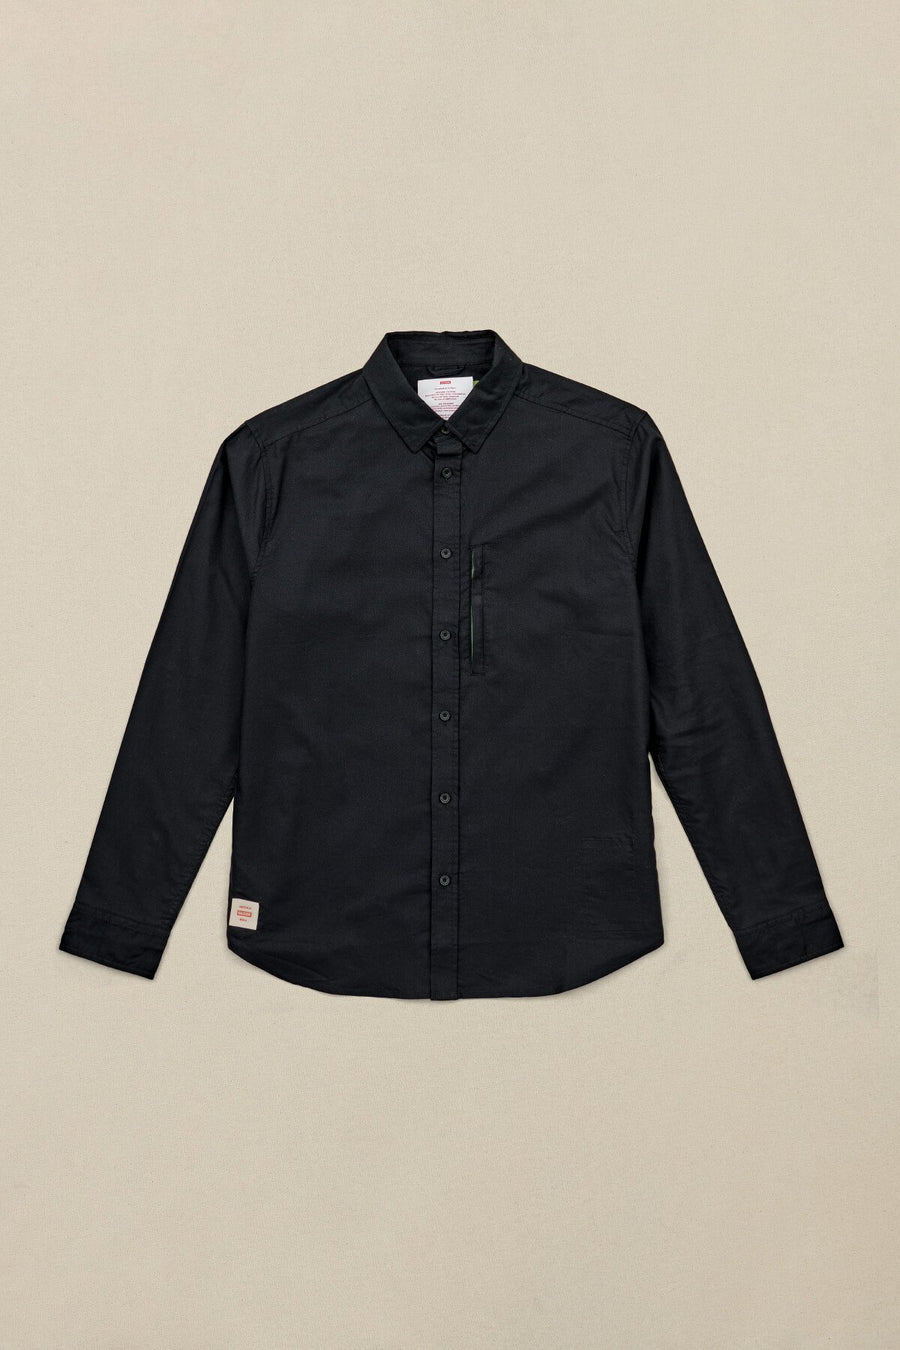 Globe Foundation LS Shirt Black - [ka(:)rısma] showroom & concept store